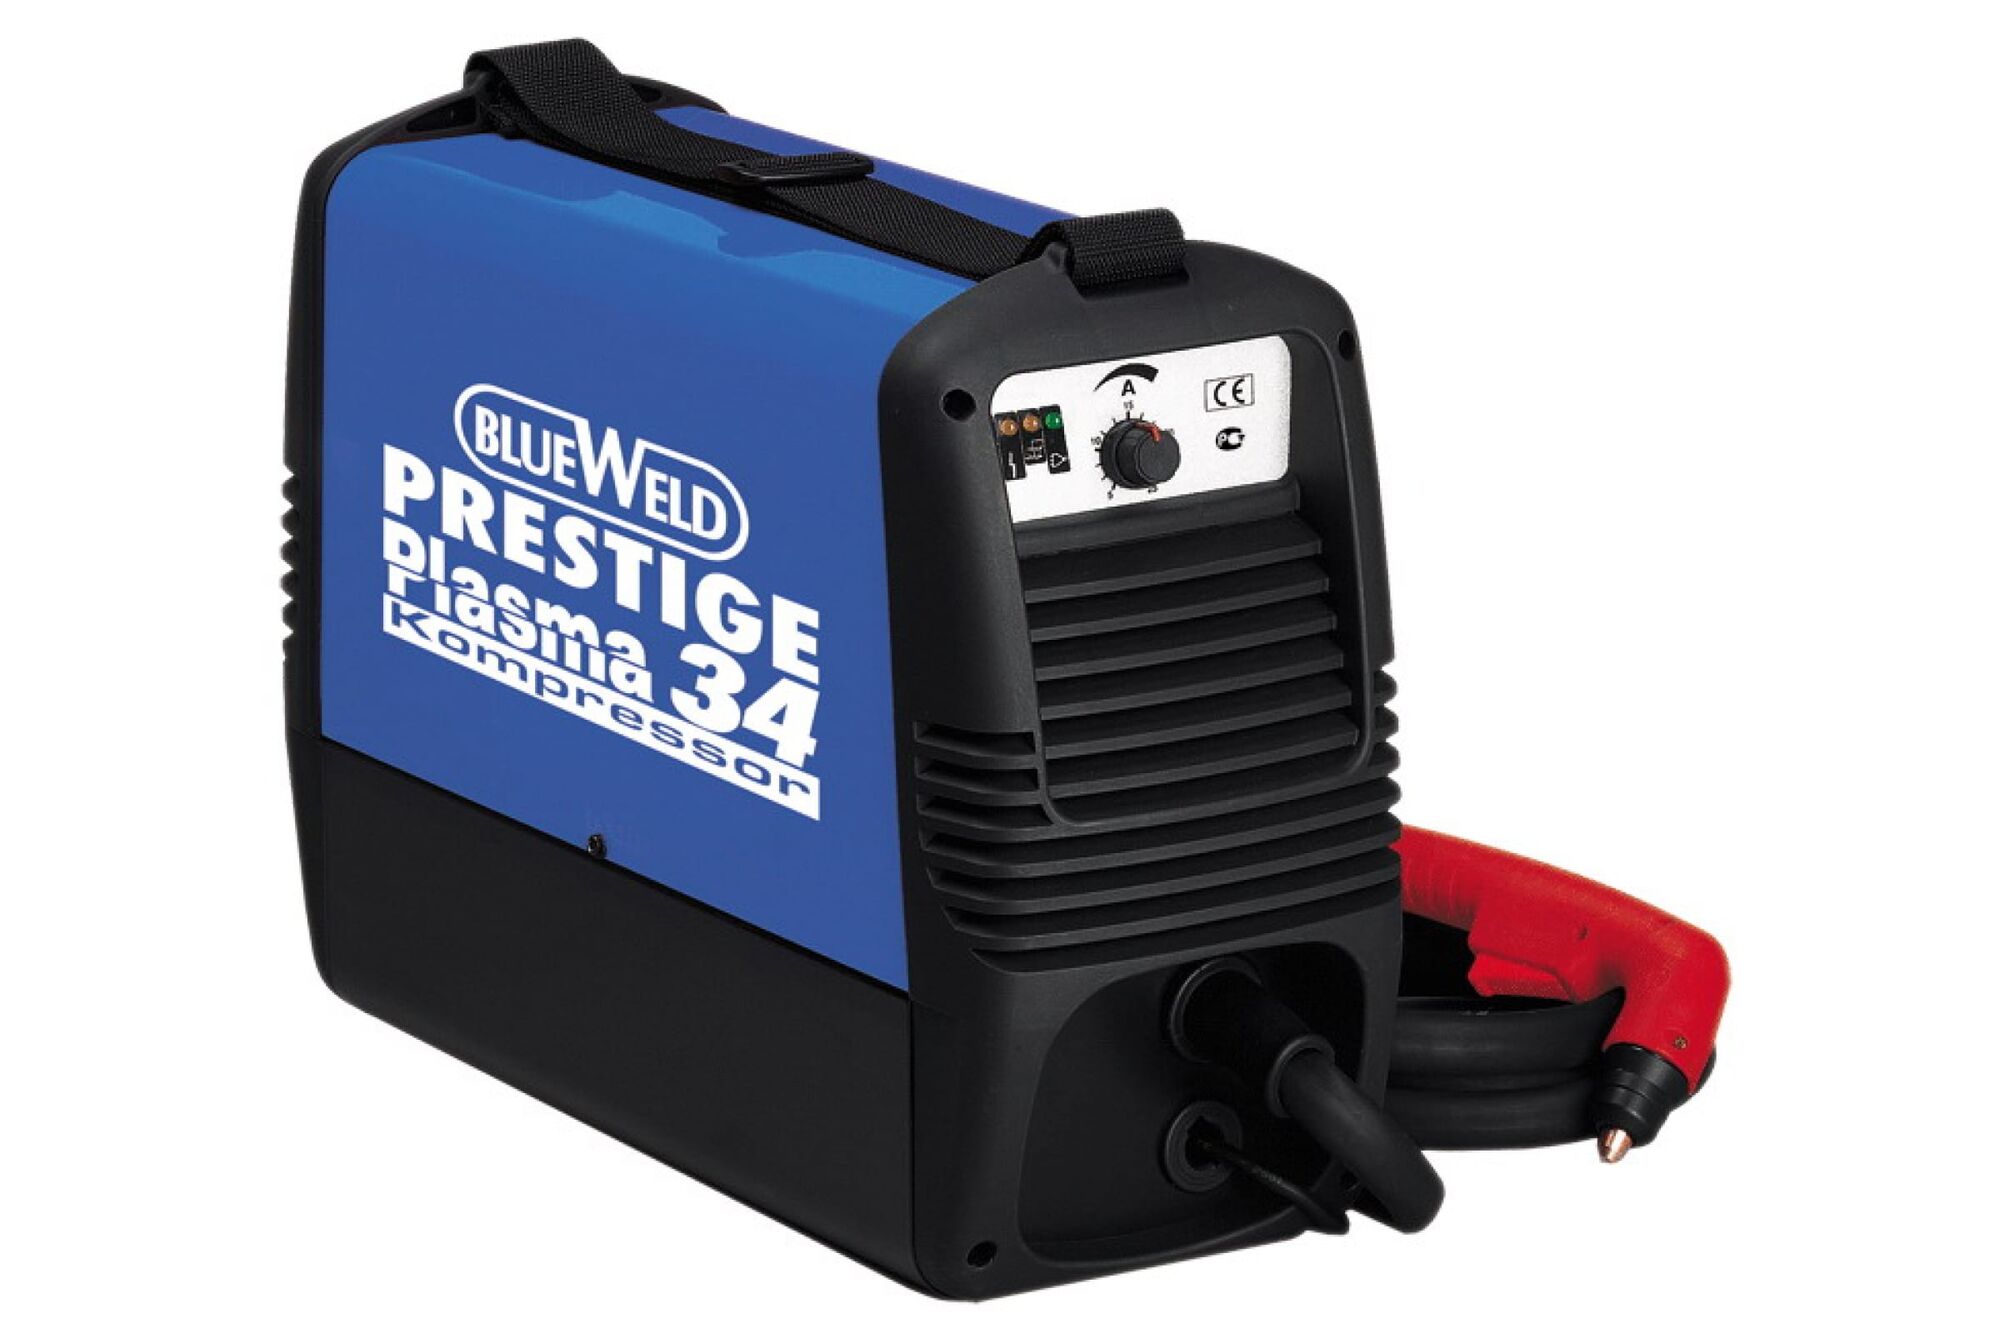 Инвертор плазменной резки BlueWeld Prestige Plasma 34 Kompressor 815361 Blue Weld